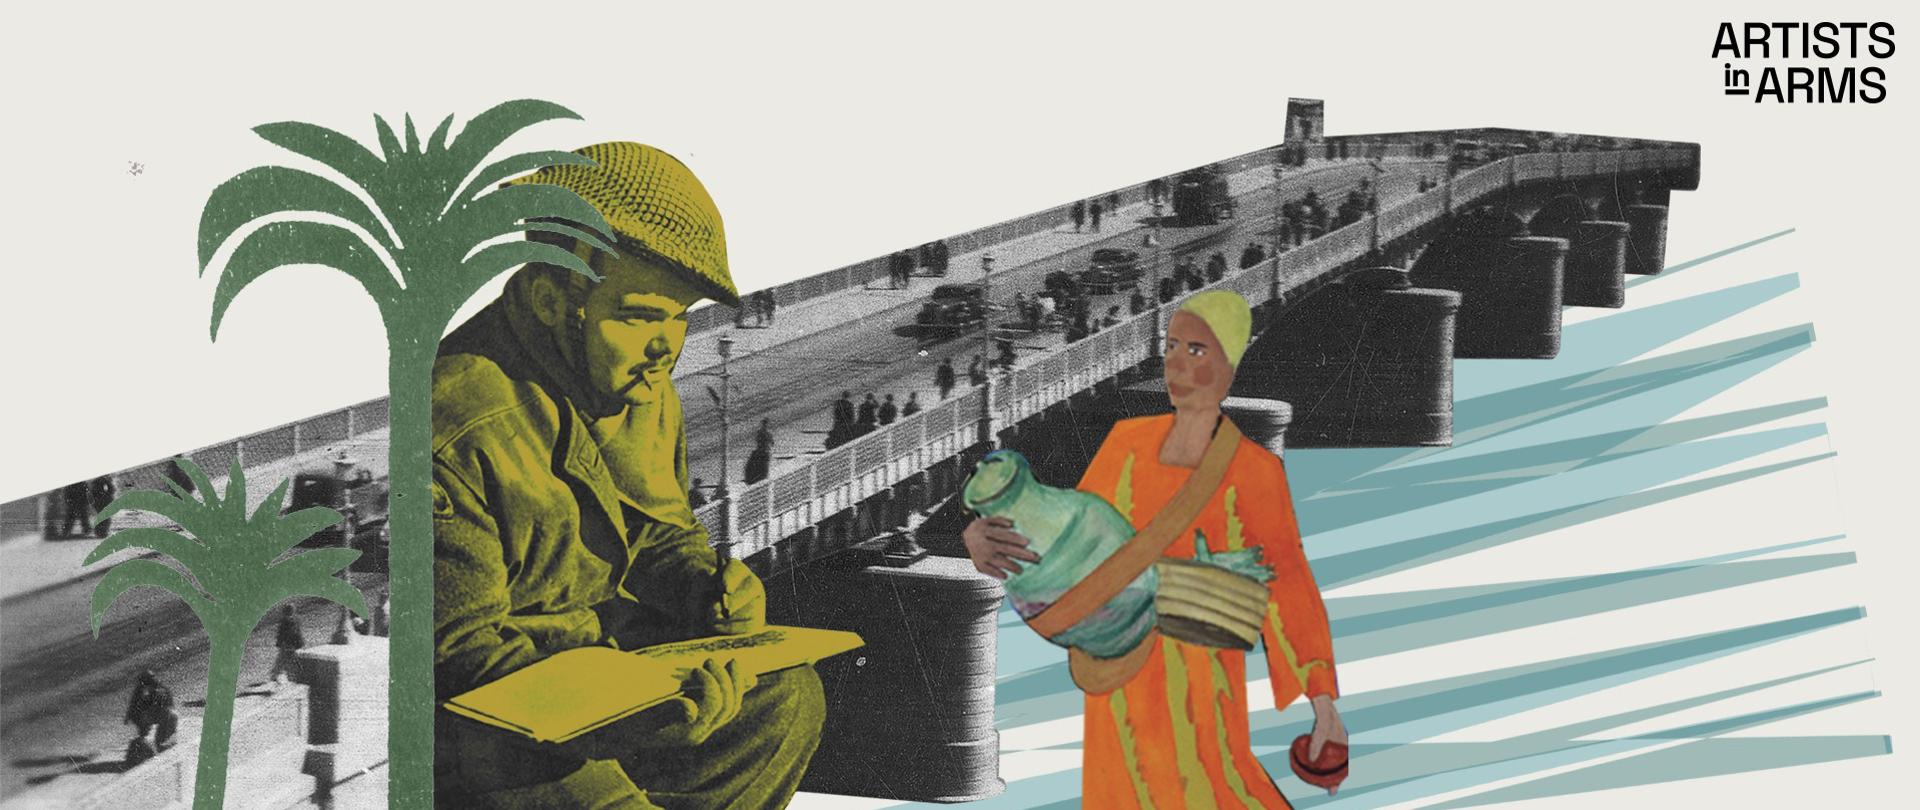 ‘Baghdad’ collage for the Artists in Arms project, photo: artwork by rzeczyobrazkowe / Adam Mickiewicz Institute